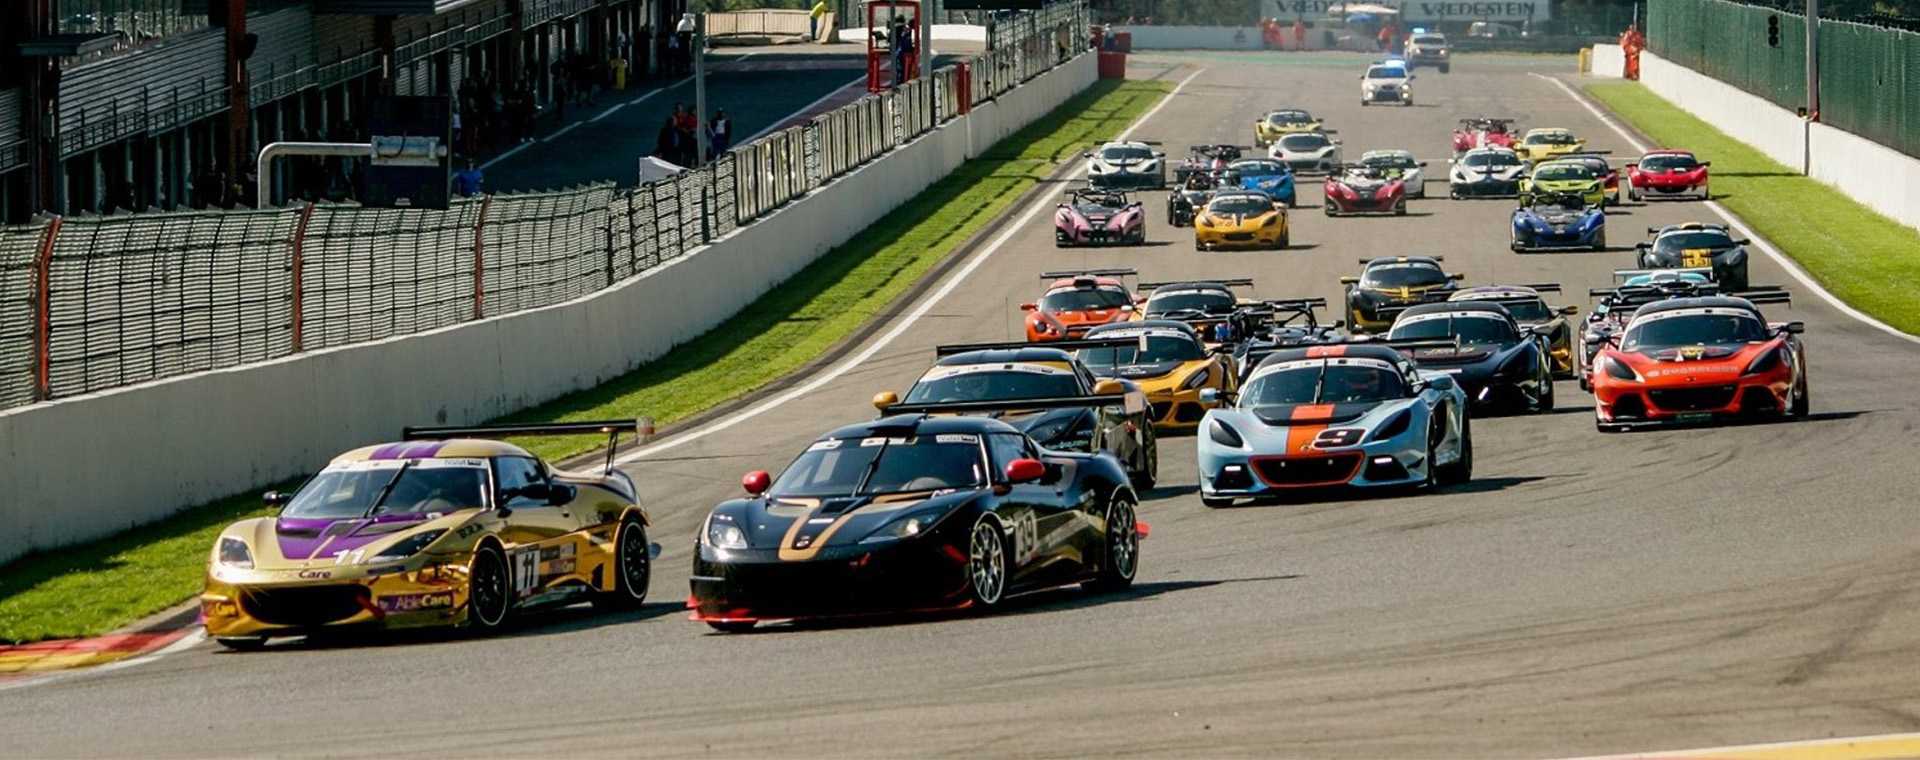 Sports cars race around a circuit